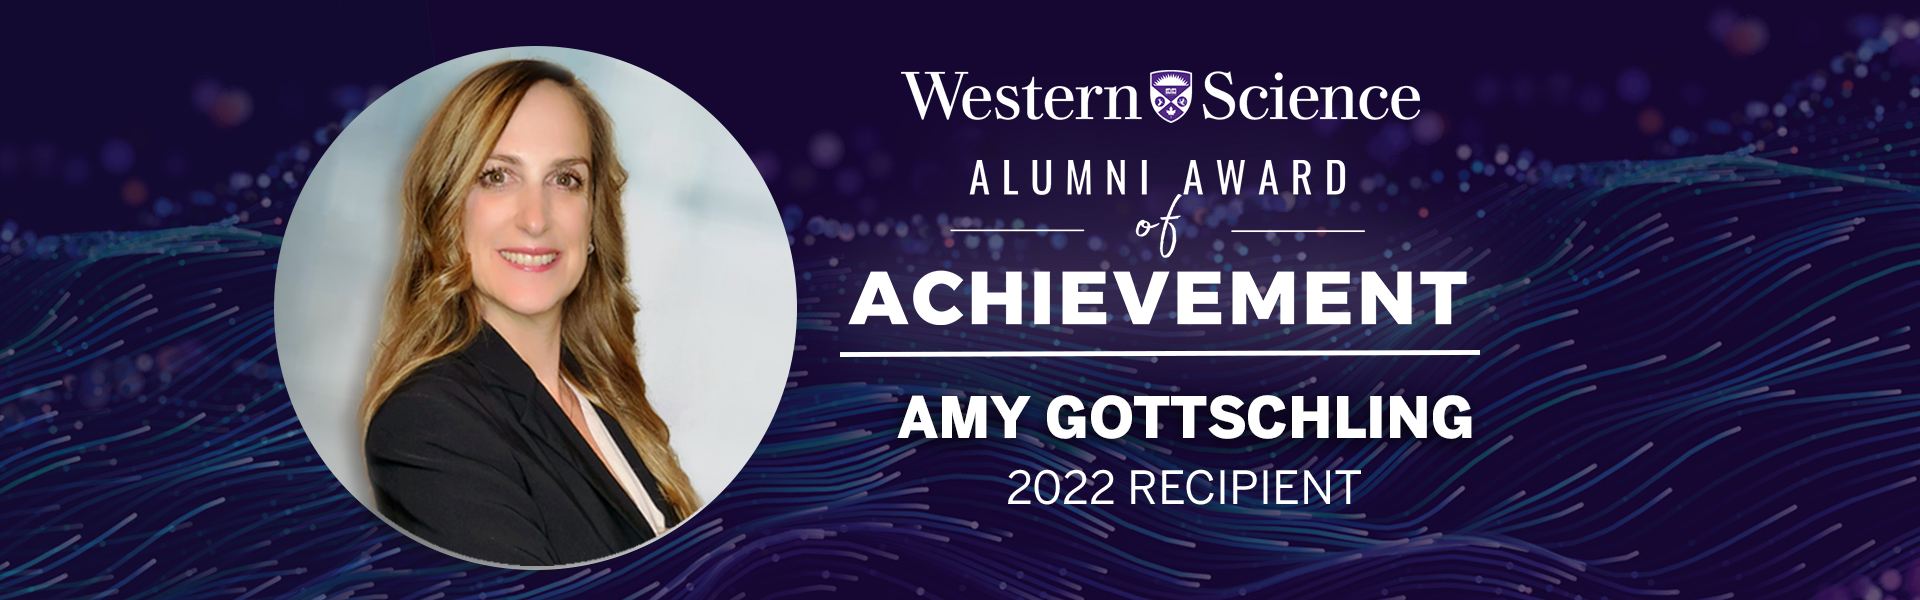 Amy Gottschling wins Alumni Achievement Award